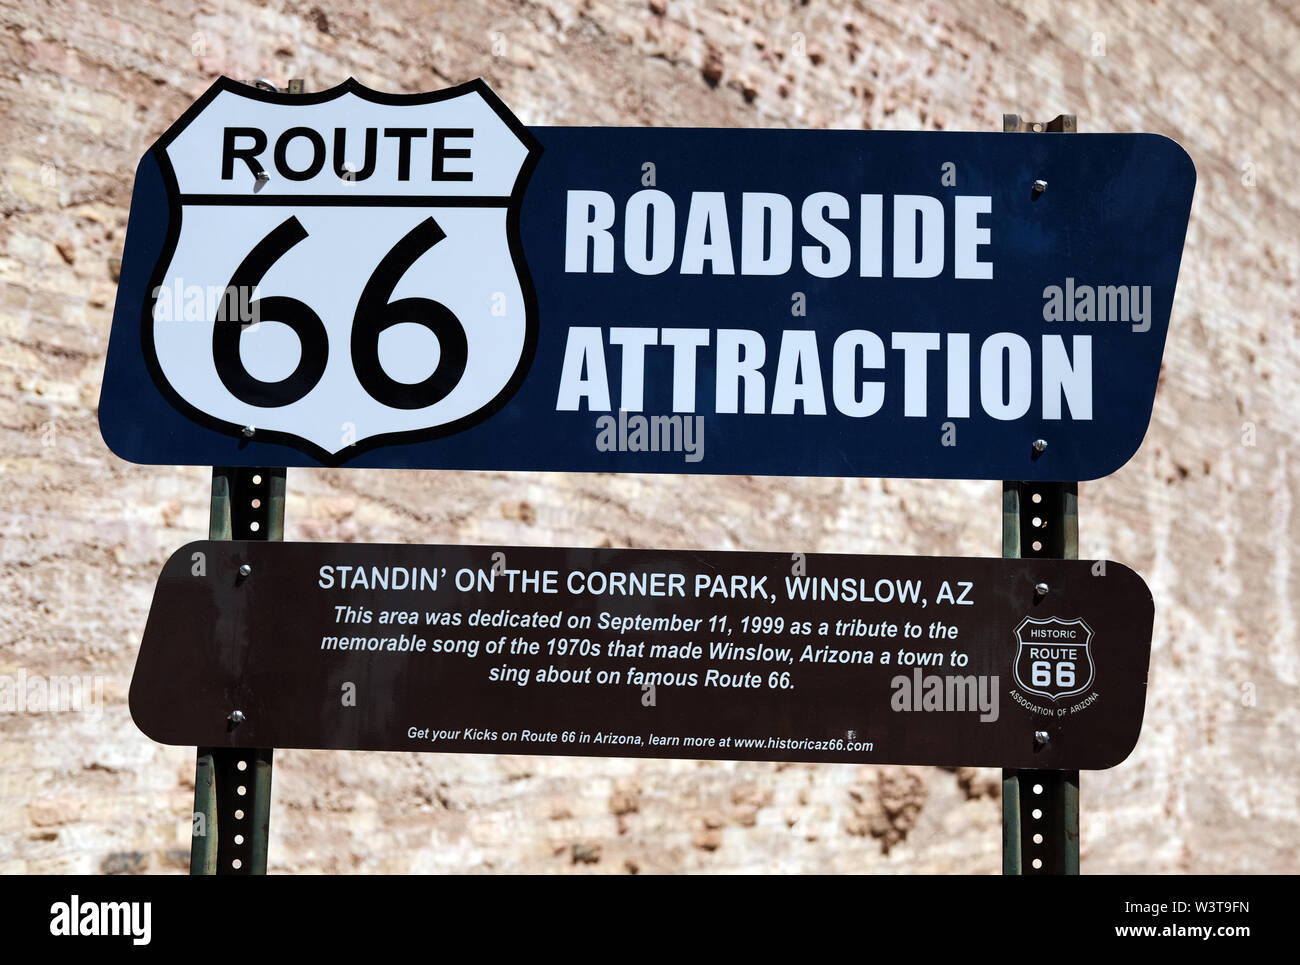 Route 66 am Straßenrand Attraktion anmelden Winslow, Arizona Stockfoto